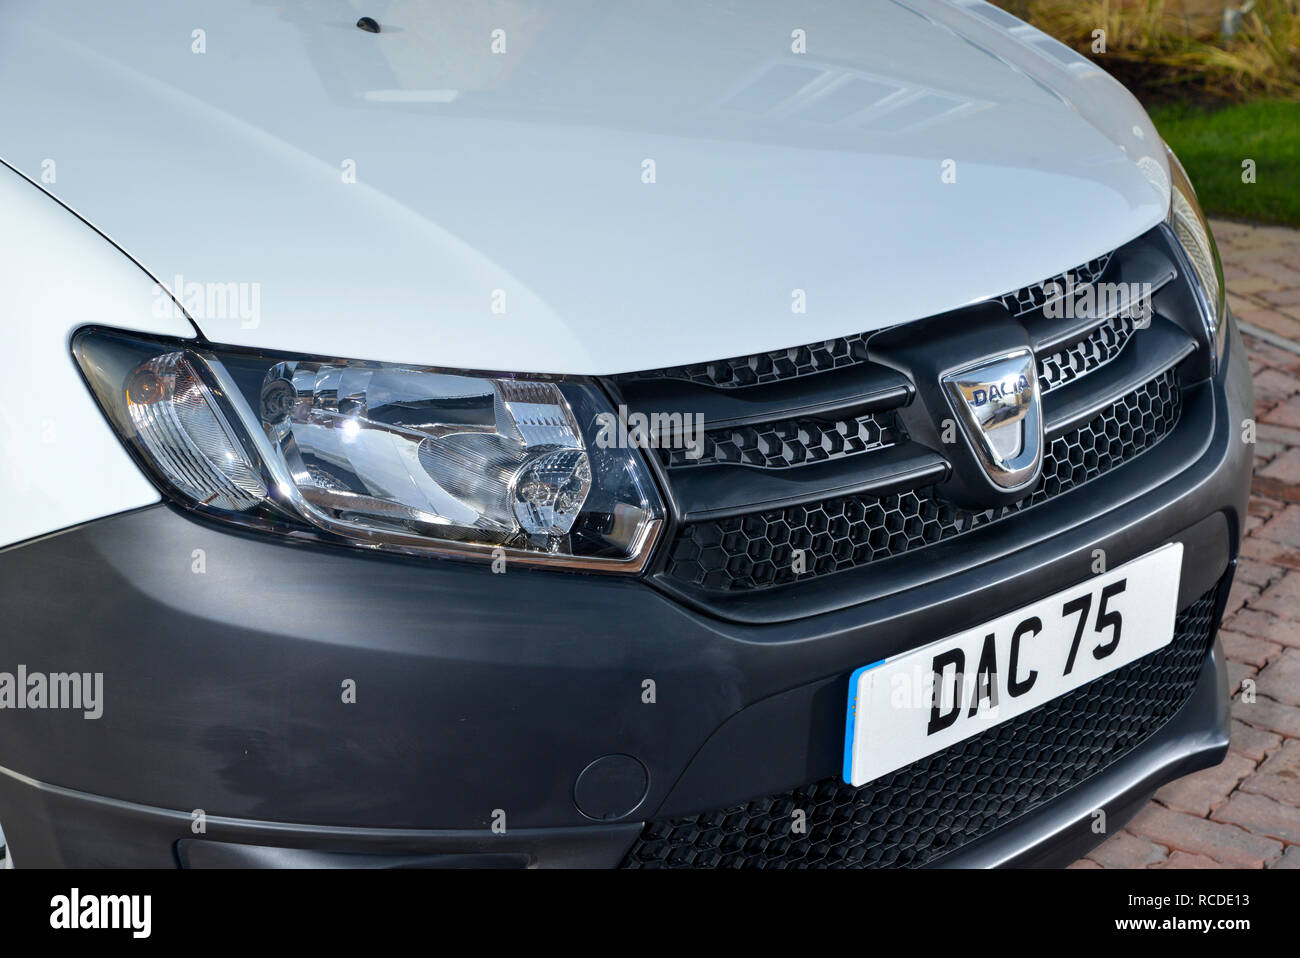 2013 Dacia Sandero budget compact car Stock Photo